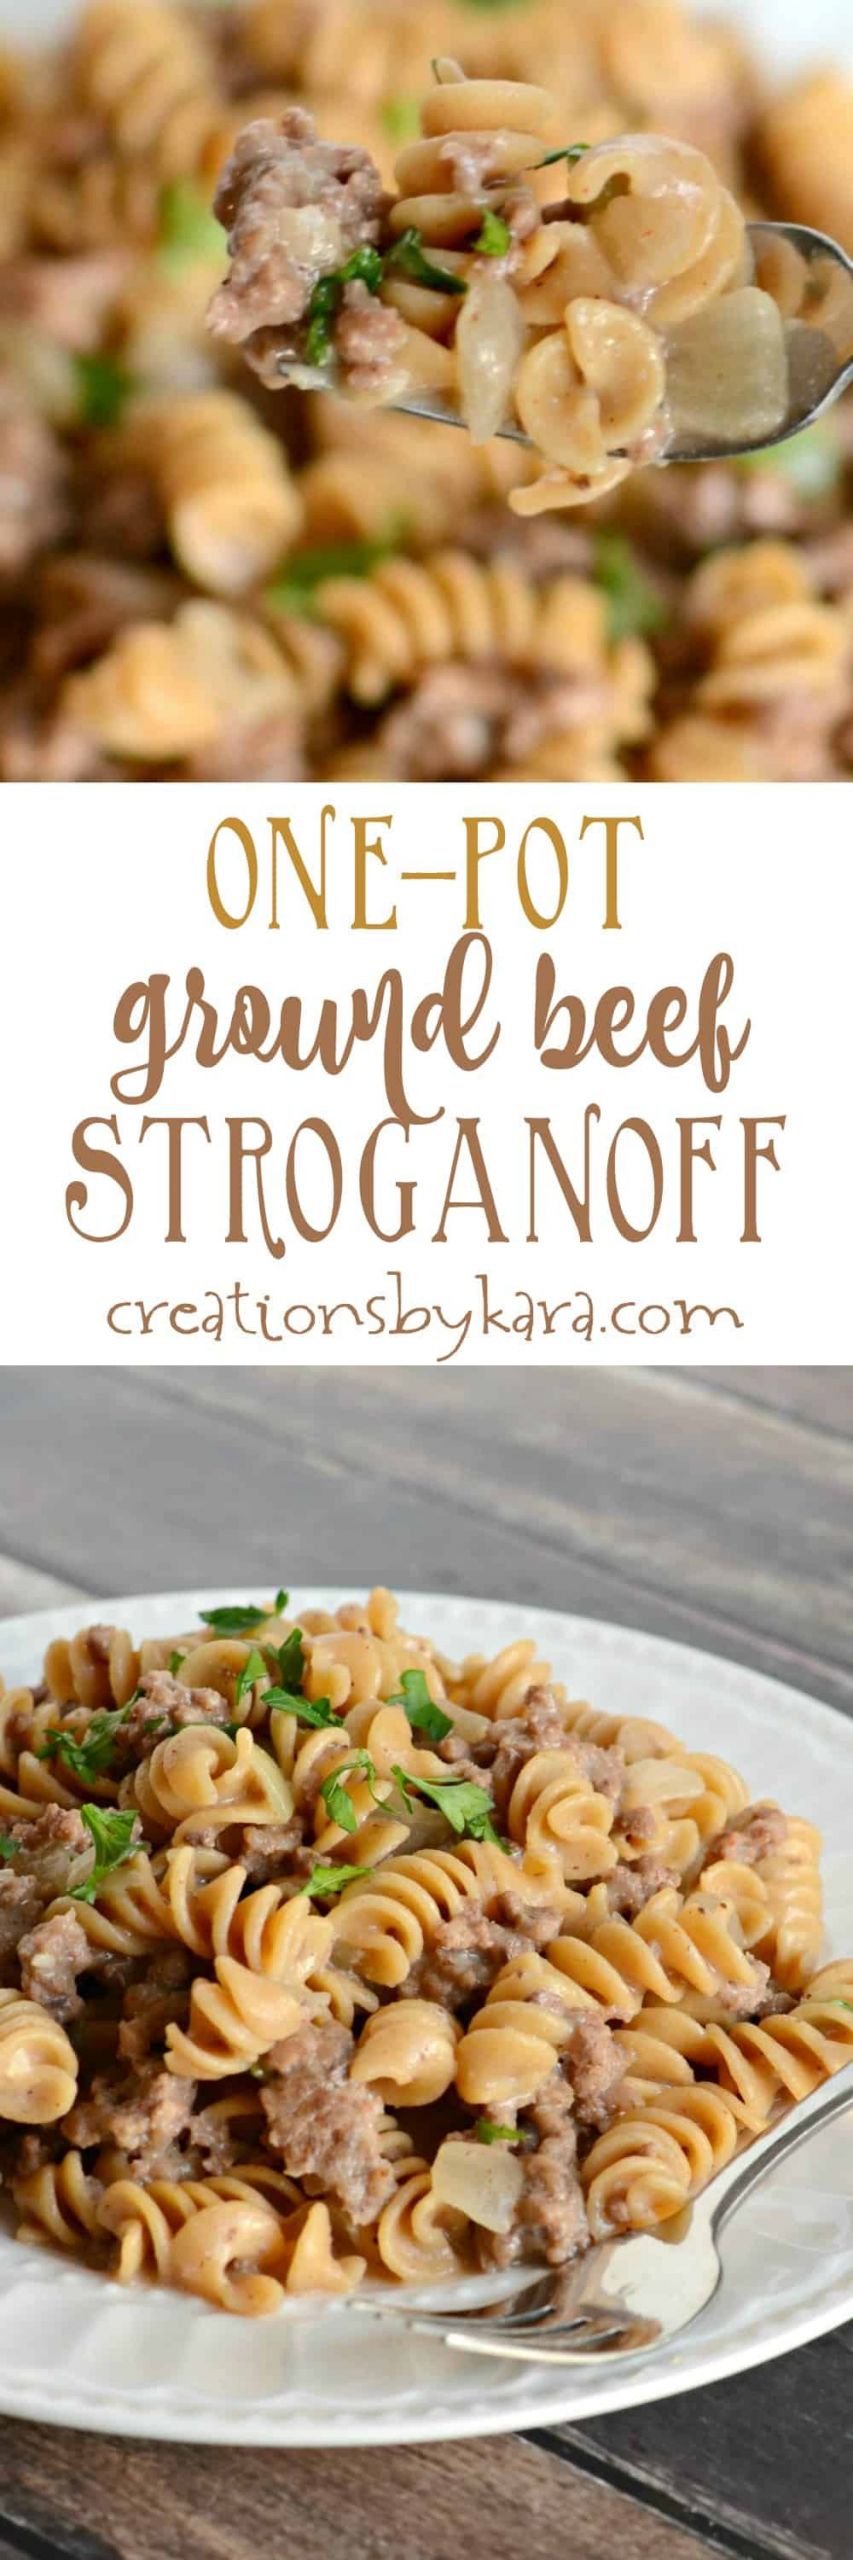 One Pot Ground Beef Recipes
 e Pot Ground Beef Stroganoff Creations by Kara